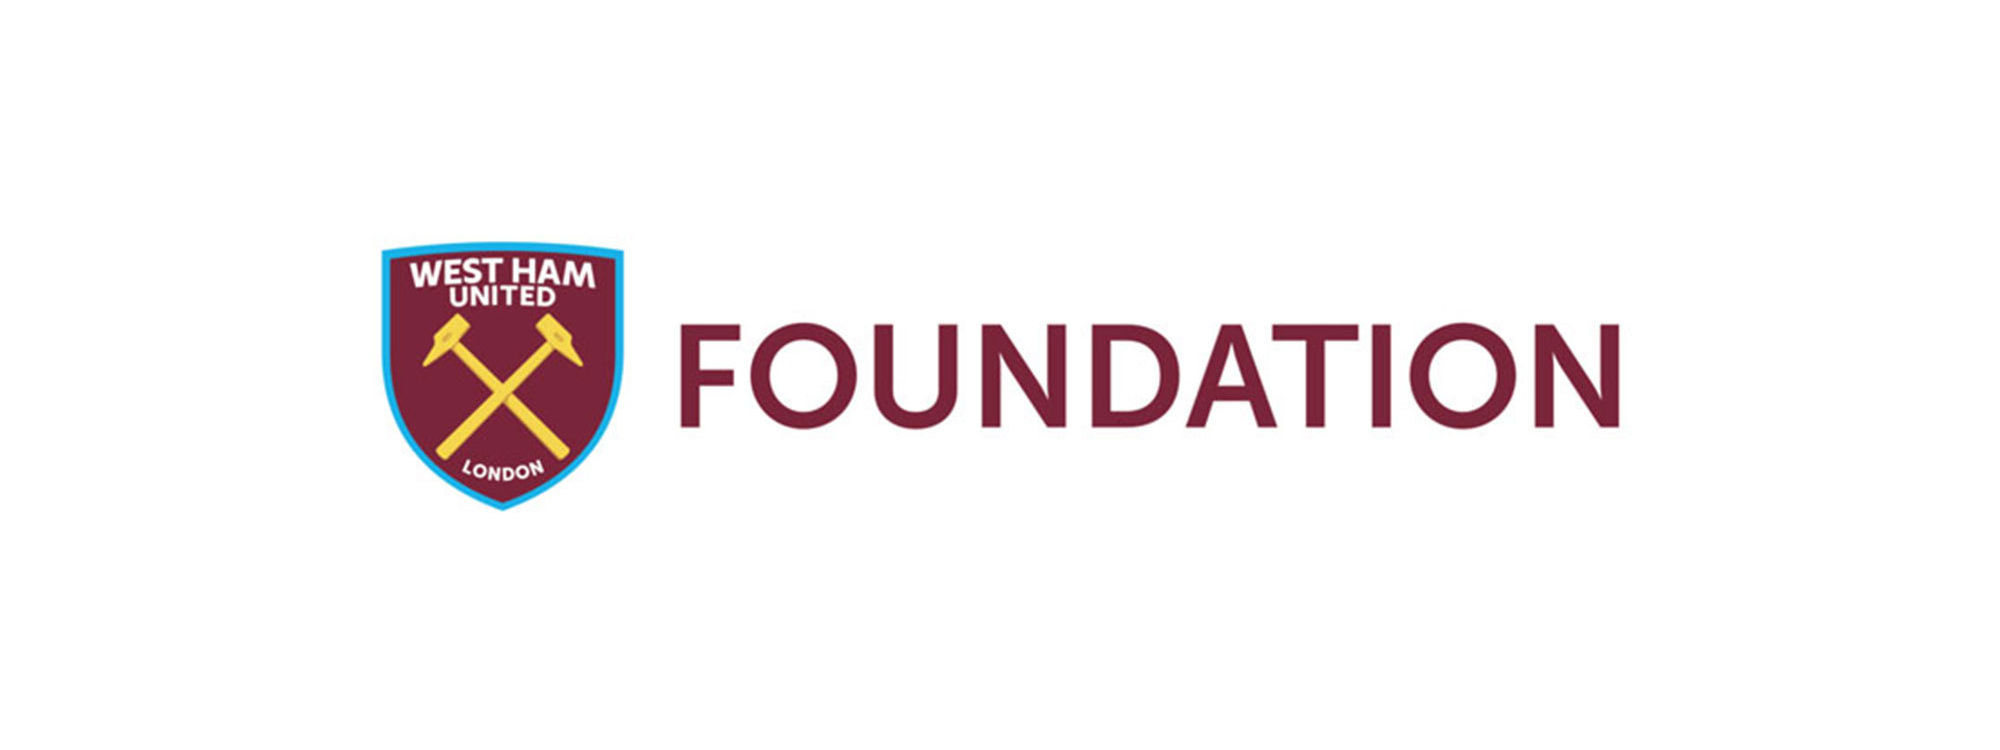 Foundation logo726